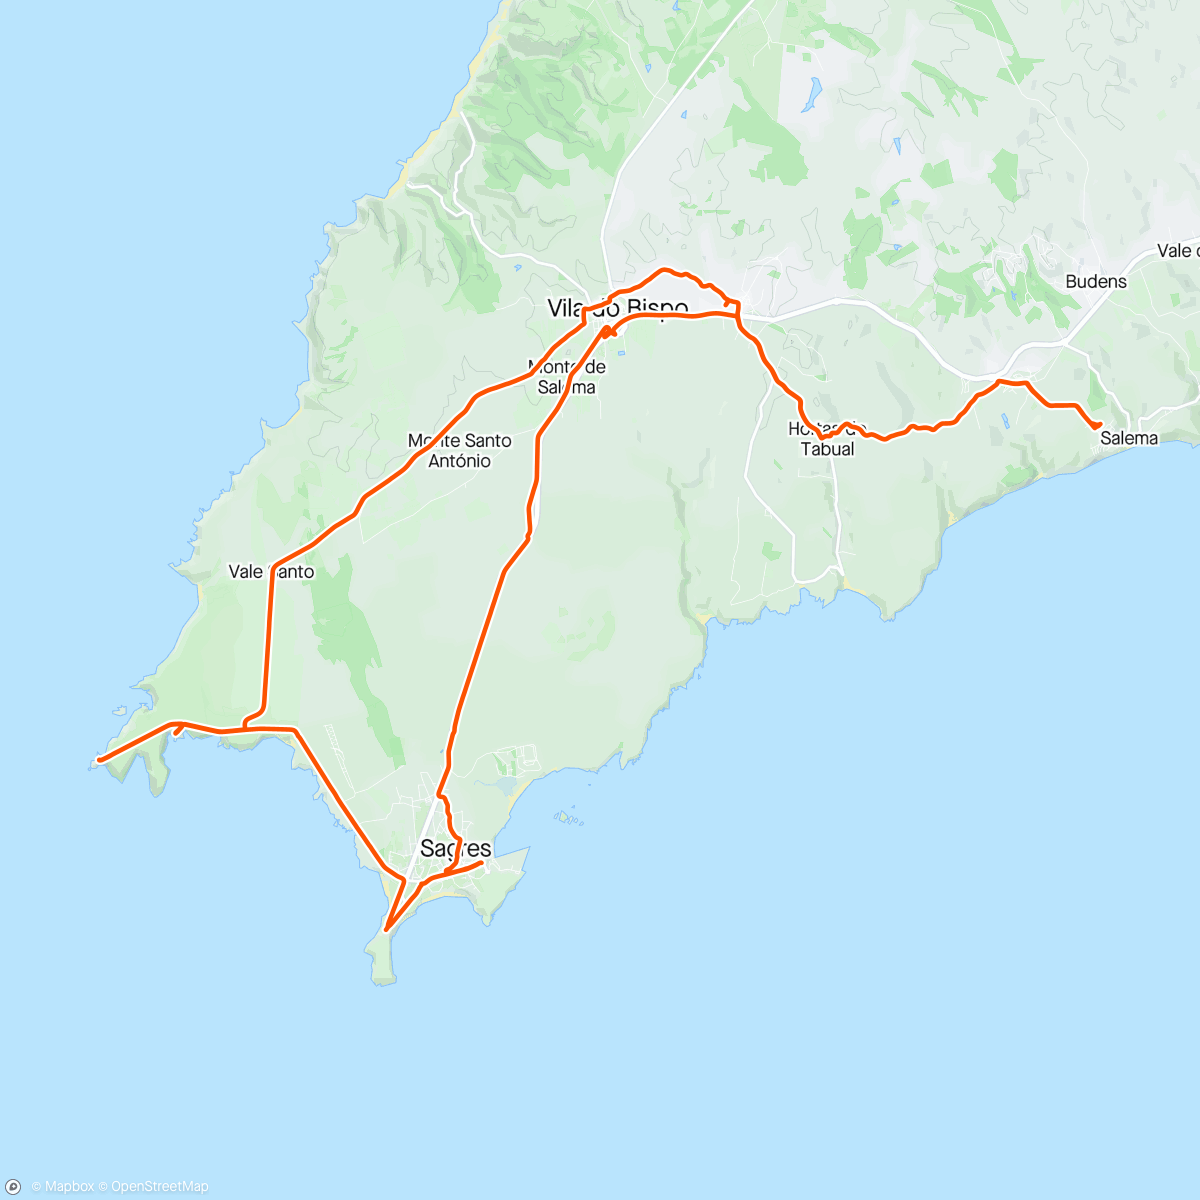 Mapa da atividade, Salema, Sao Vicente and Sagres loop